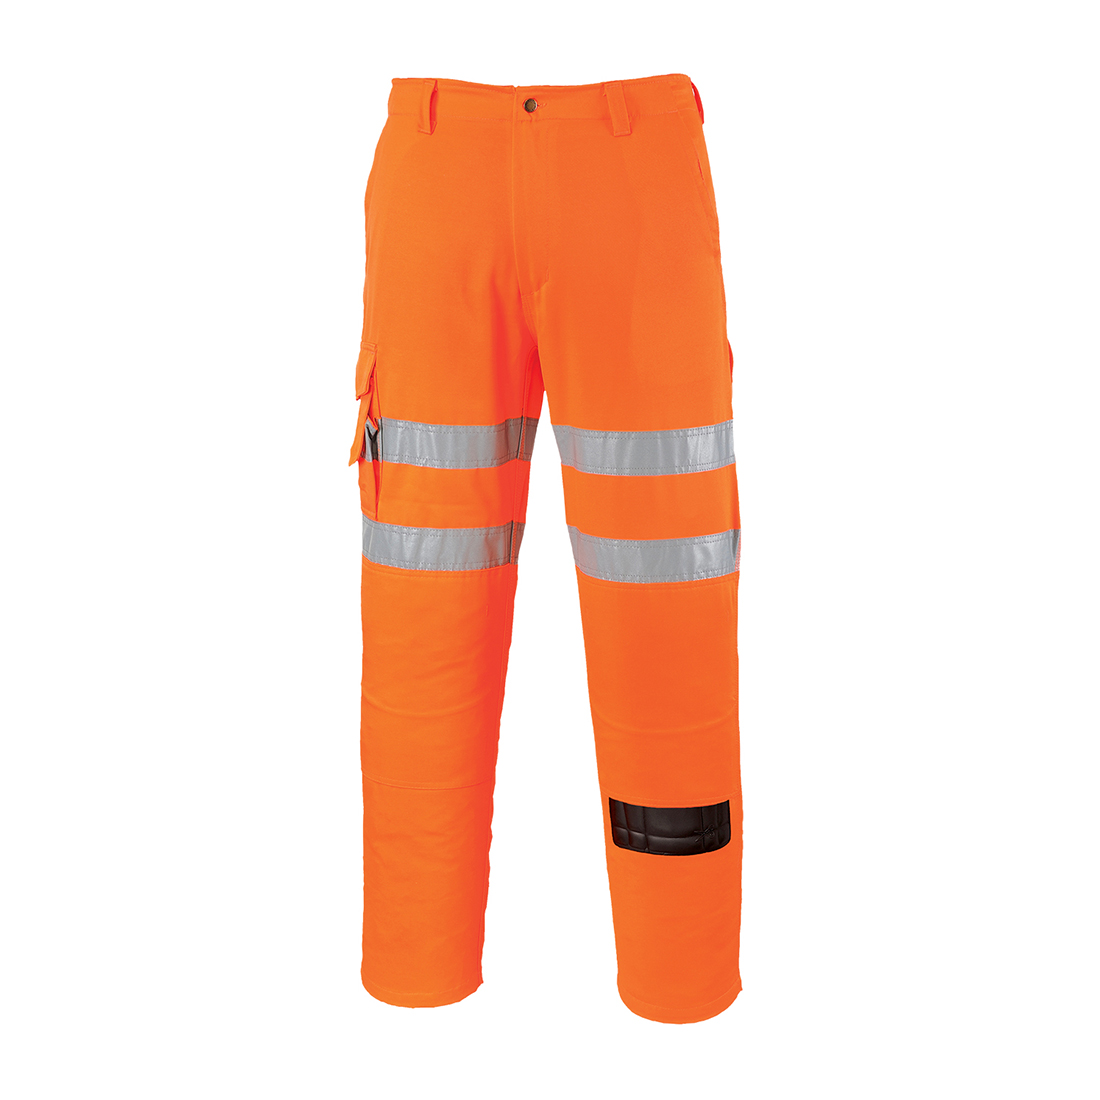 Rail Combat Trouser - Orange Tall